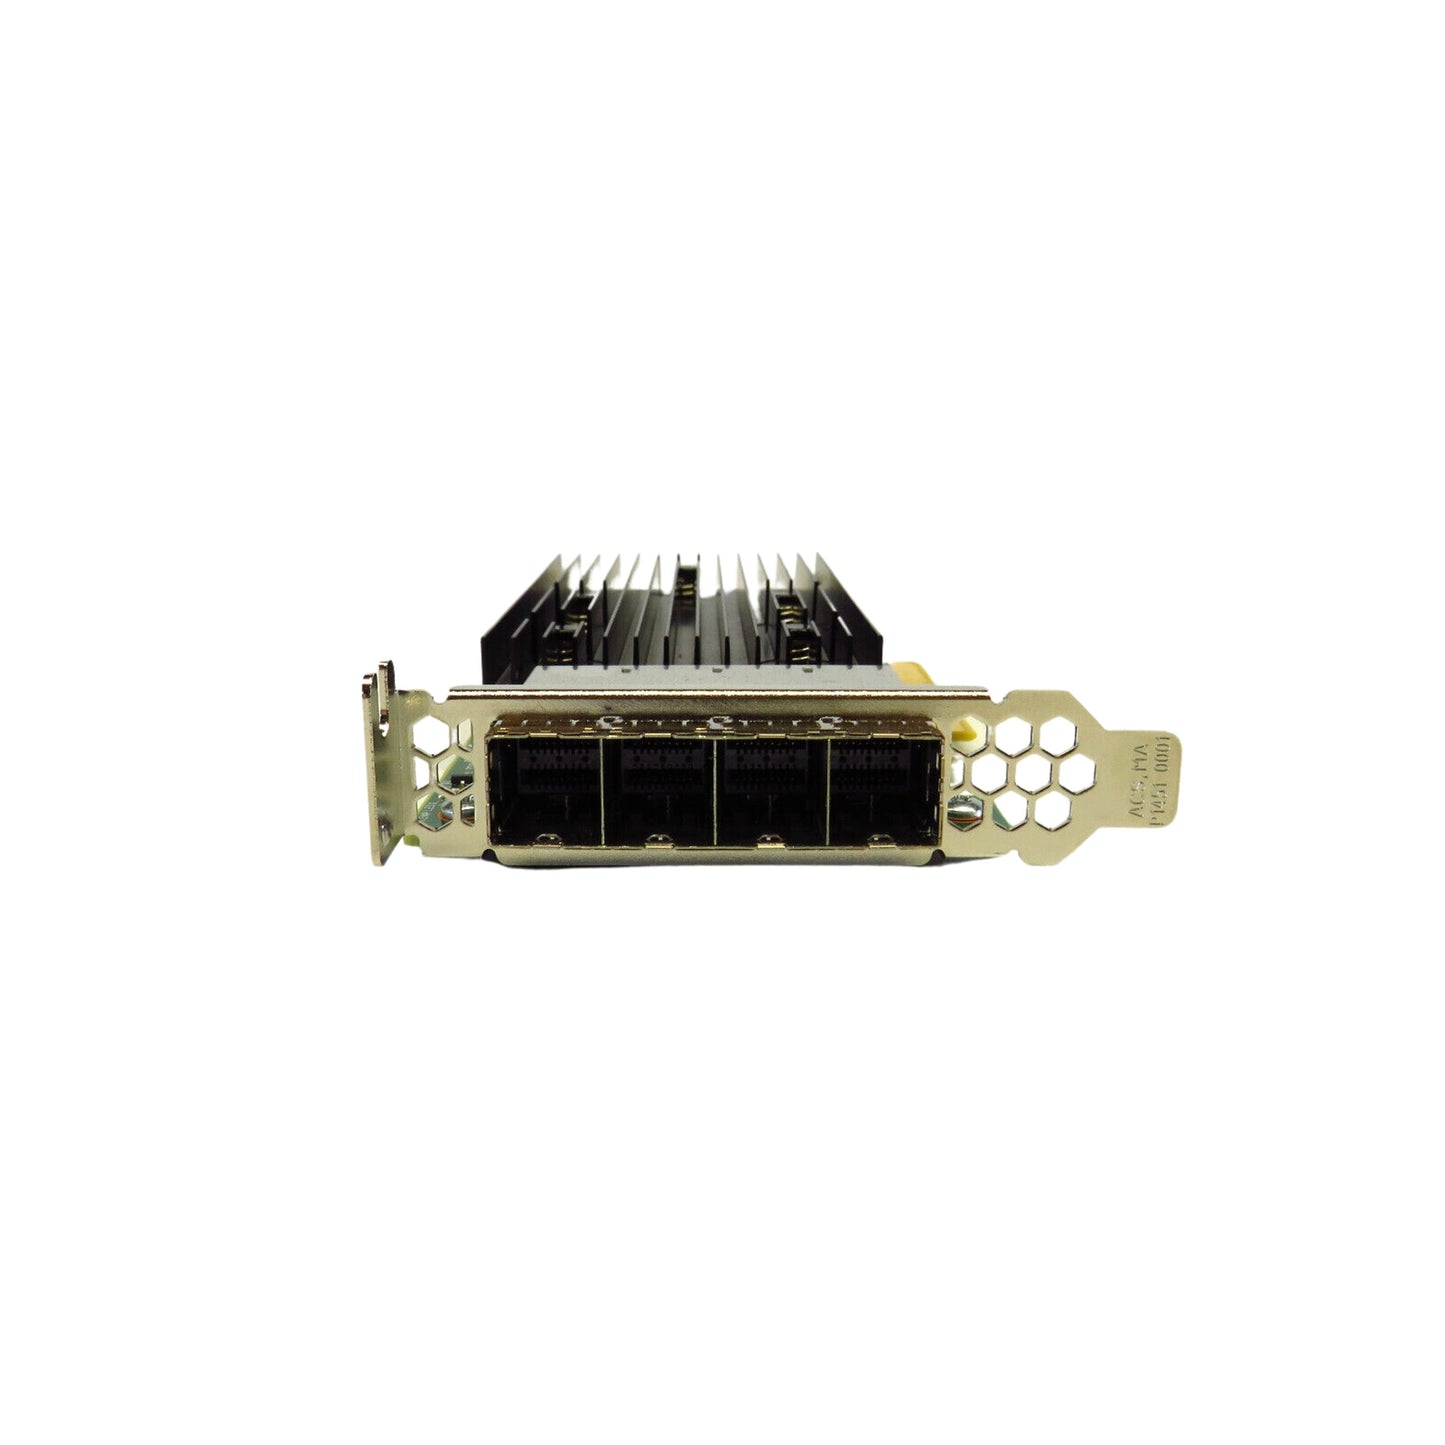 Avago SAS9305-16e 4 Port SAS 12Gbps HBA Host Bus Adapter Card (Refurbished)